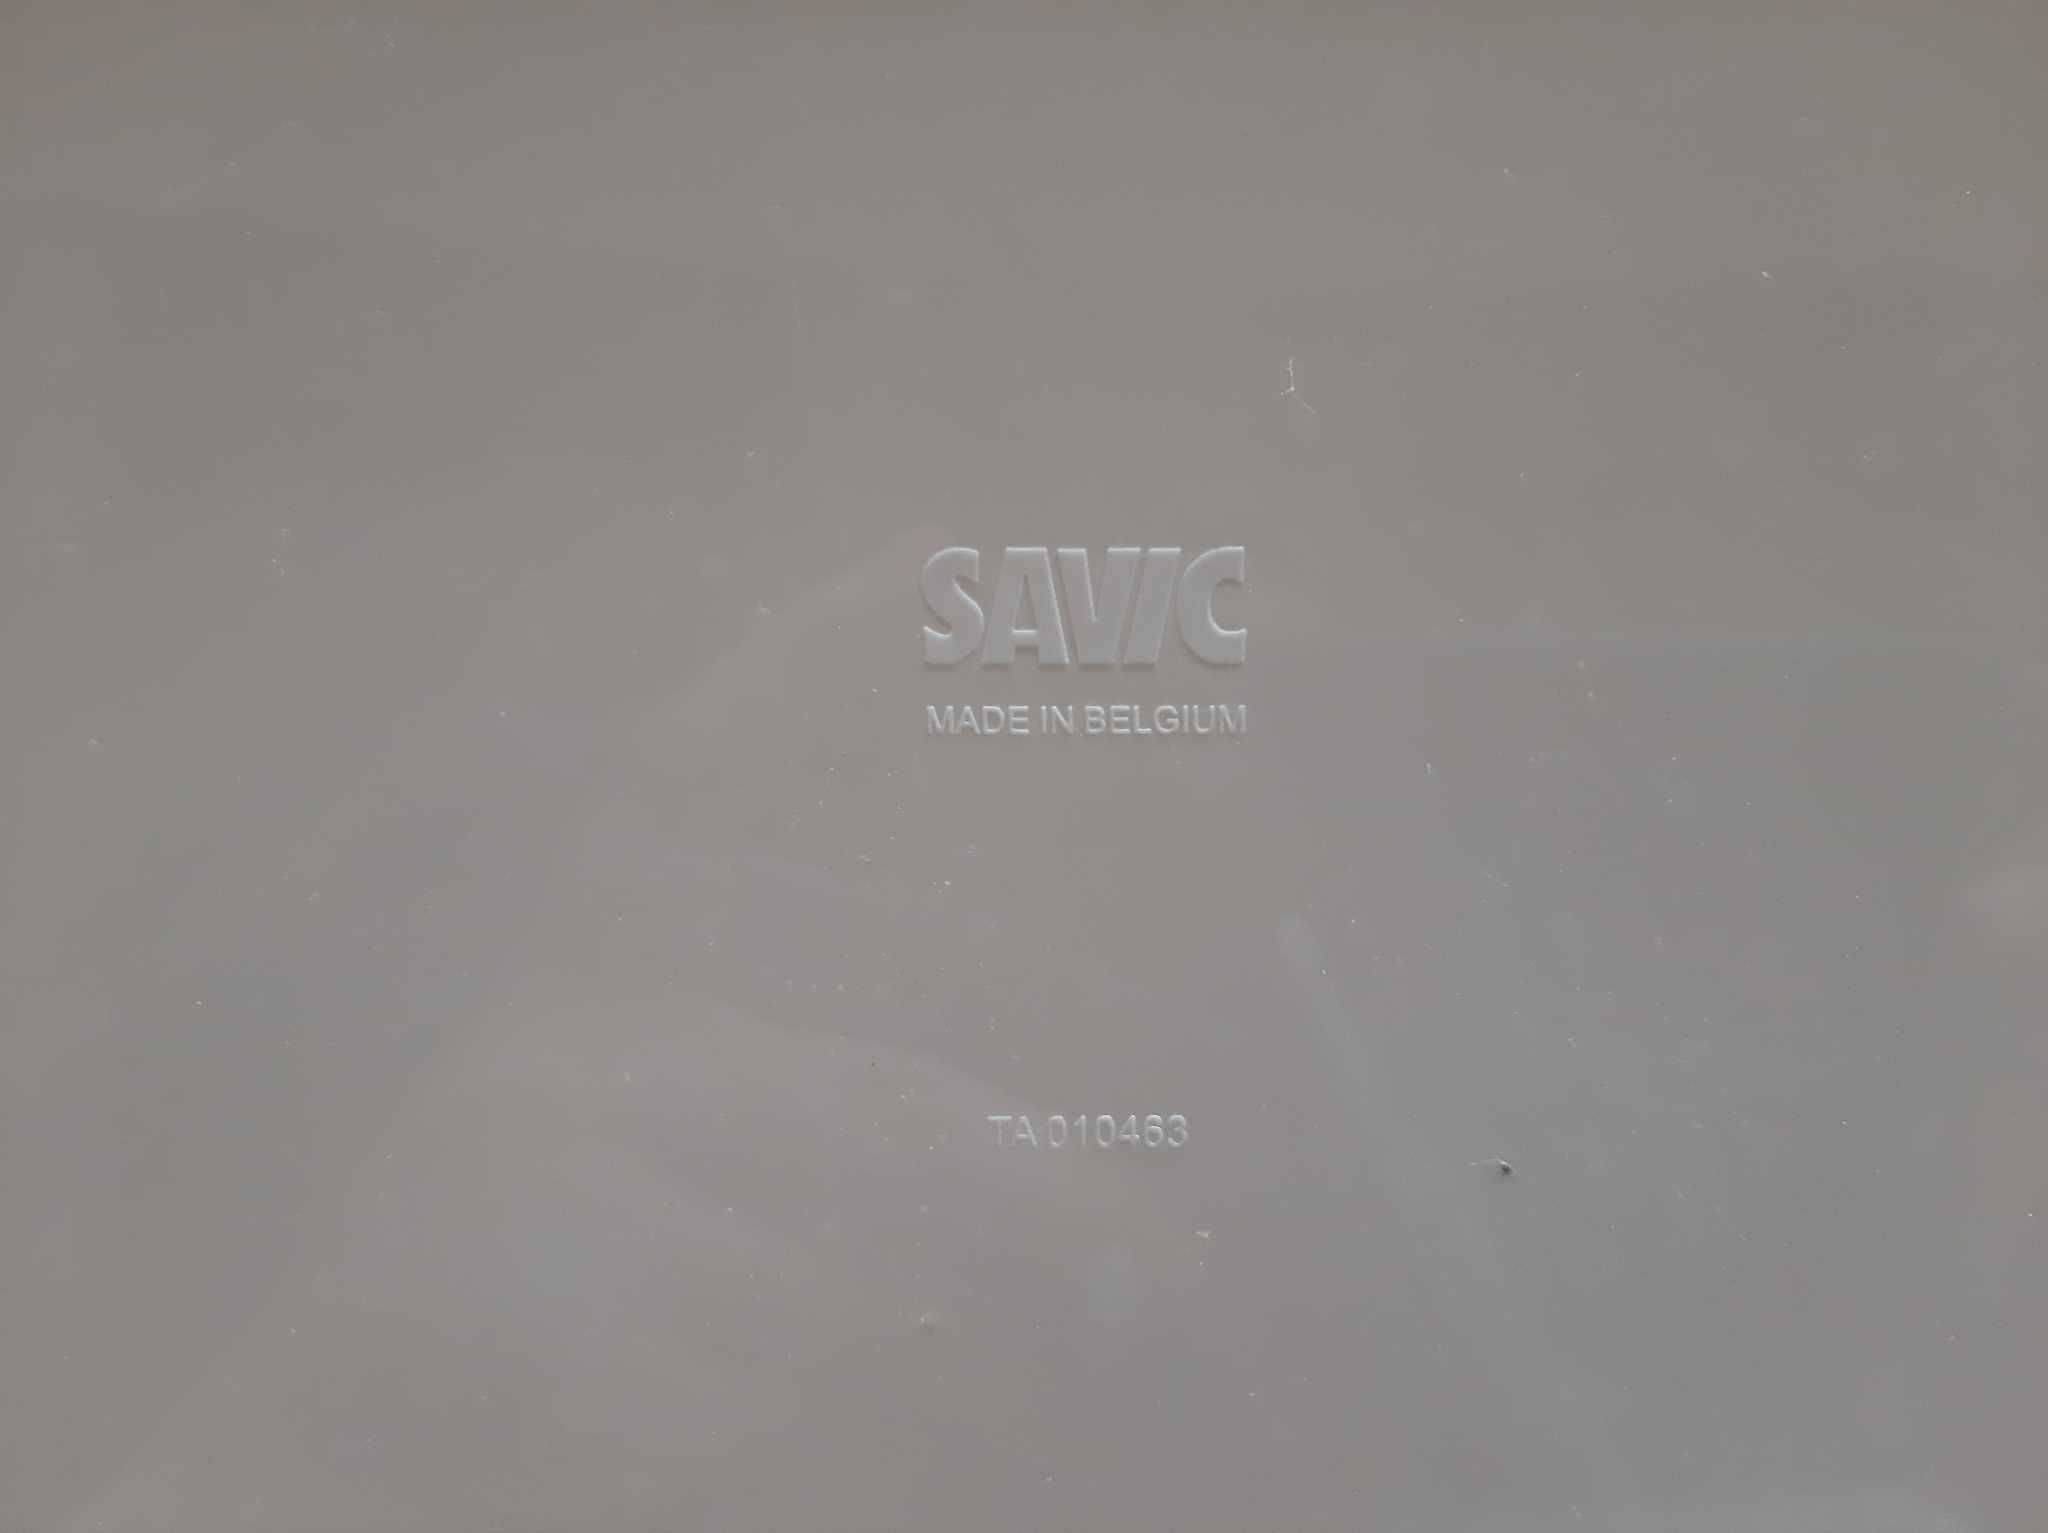 Лоток Savic 52*39.5*15 без бортика (поломался), миска и лопатка, новое